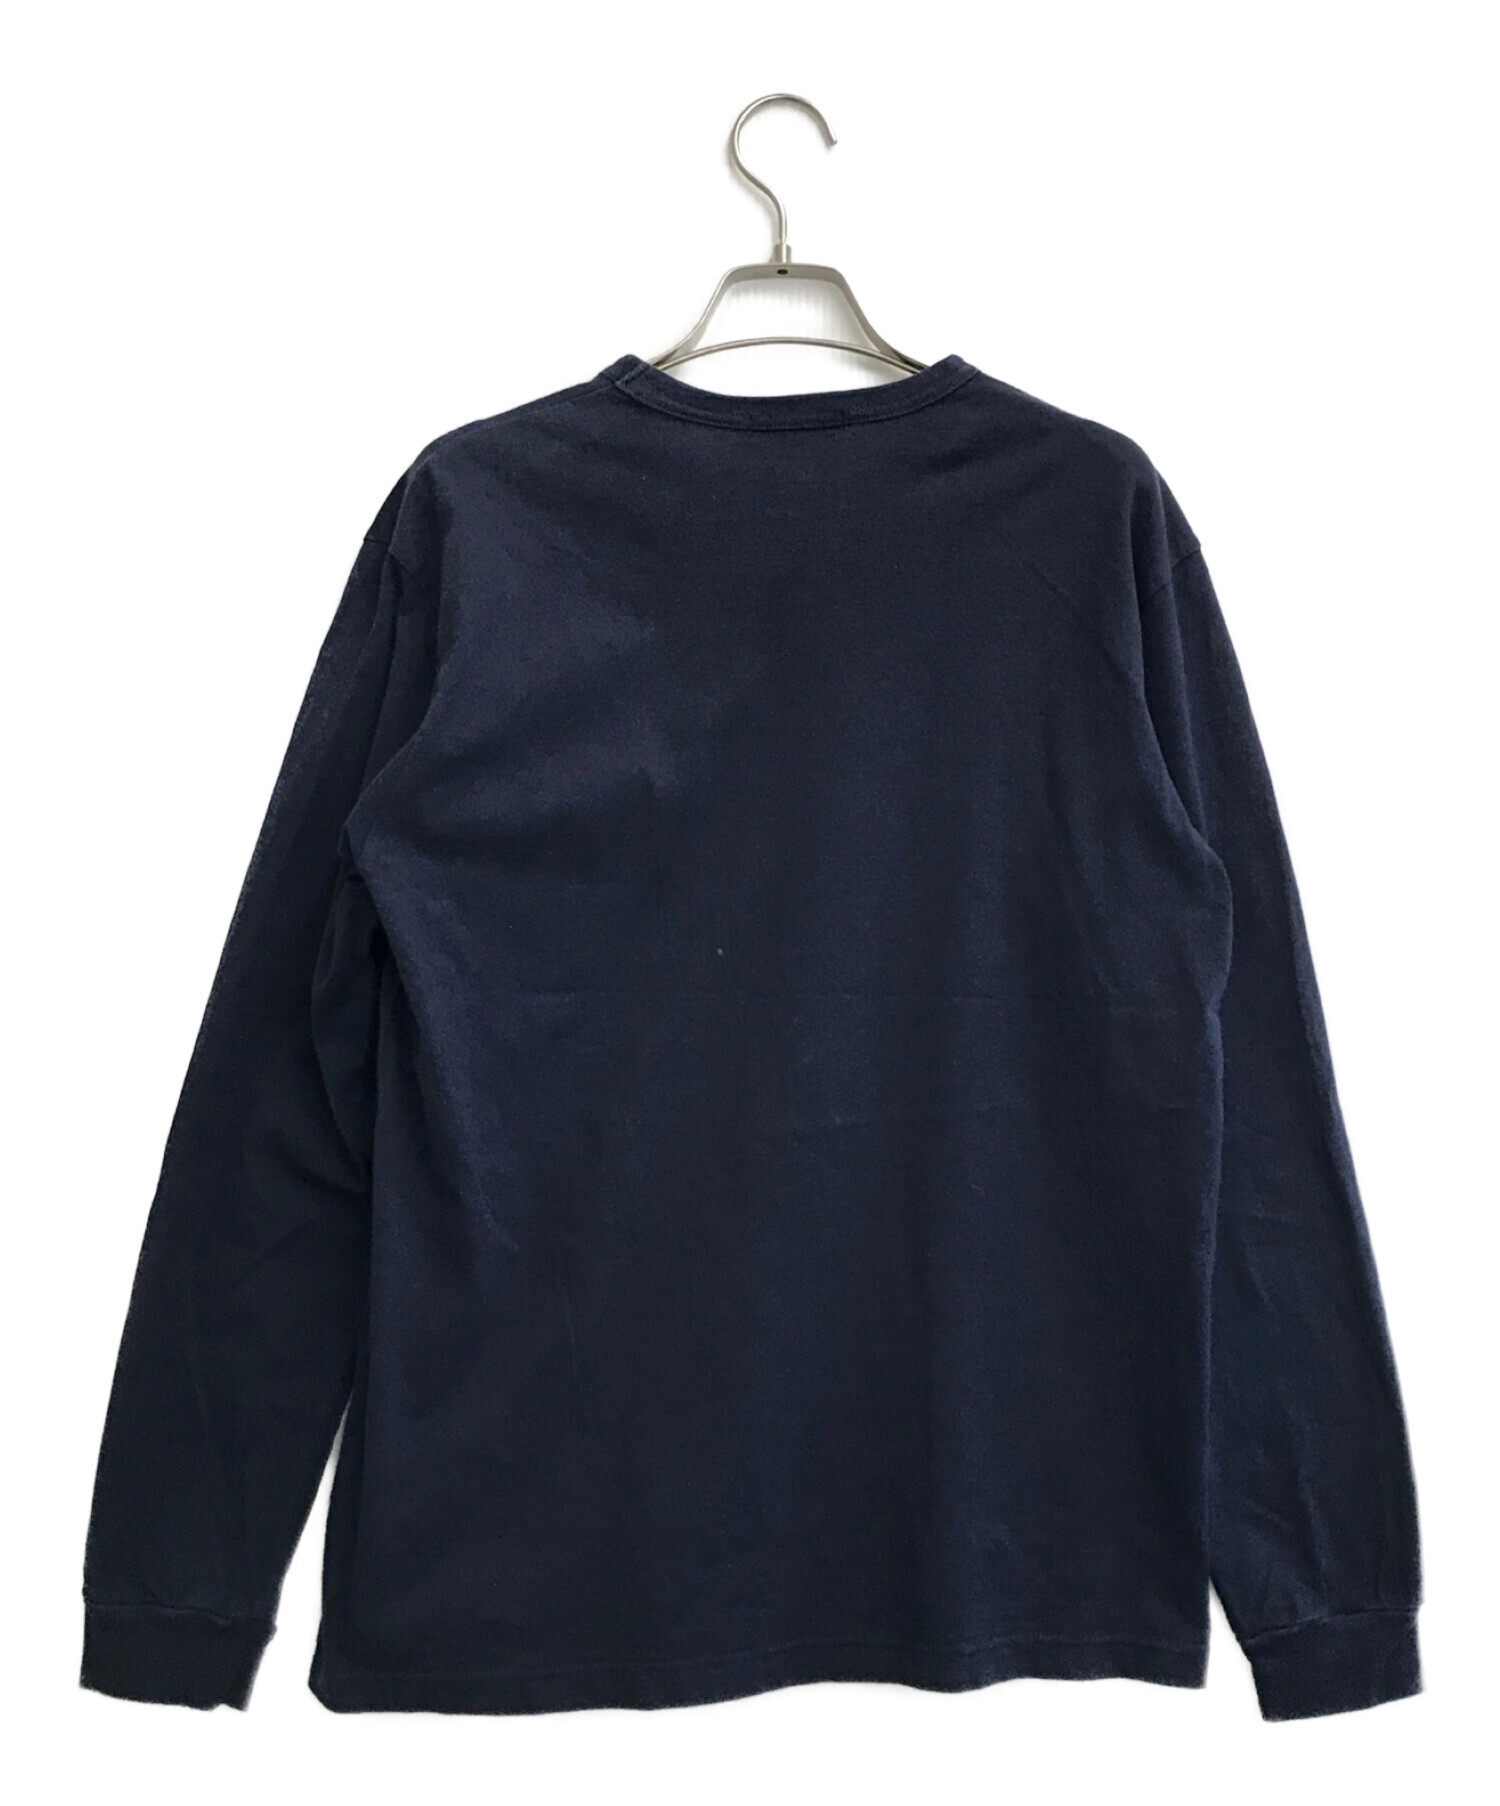 COMME des GARCONS HOMME (コムデギャルソン オム) ロゴプリントポケットTシャツ ネイビー サイズ:S